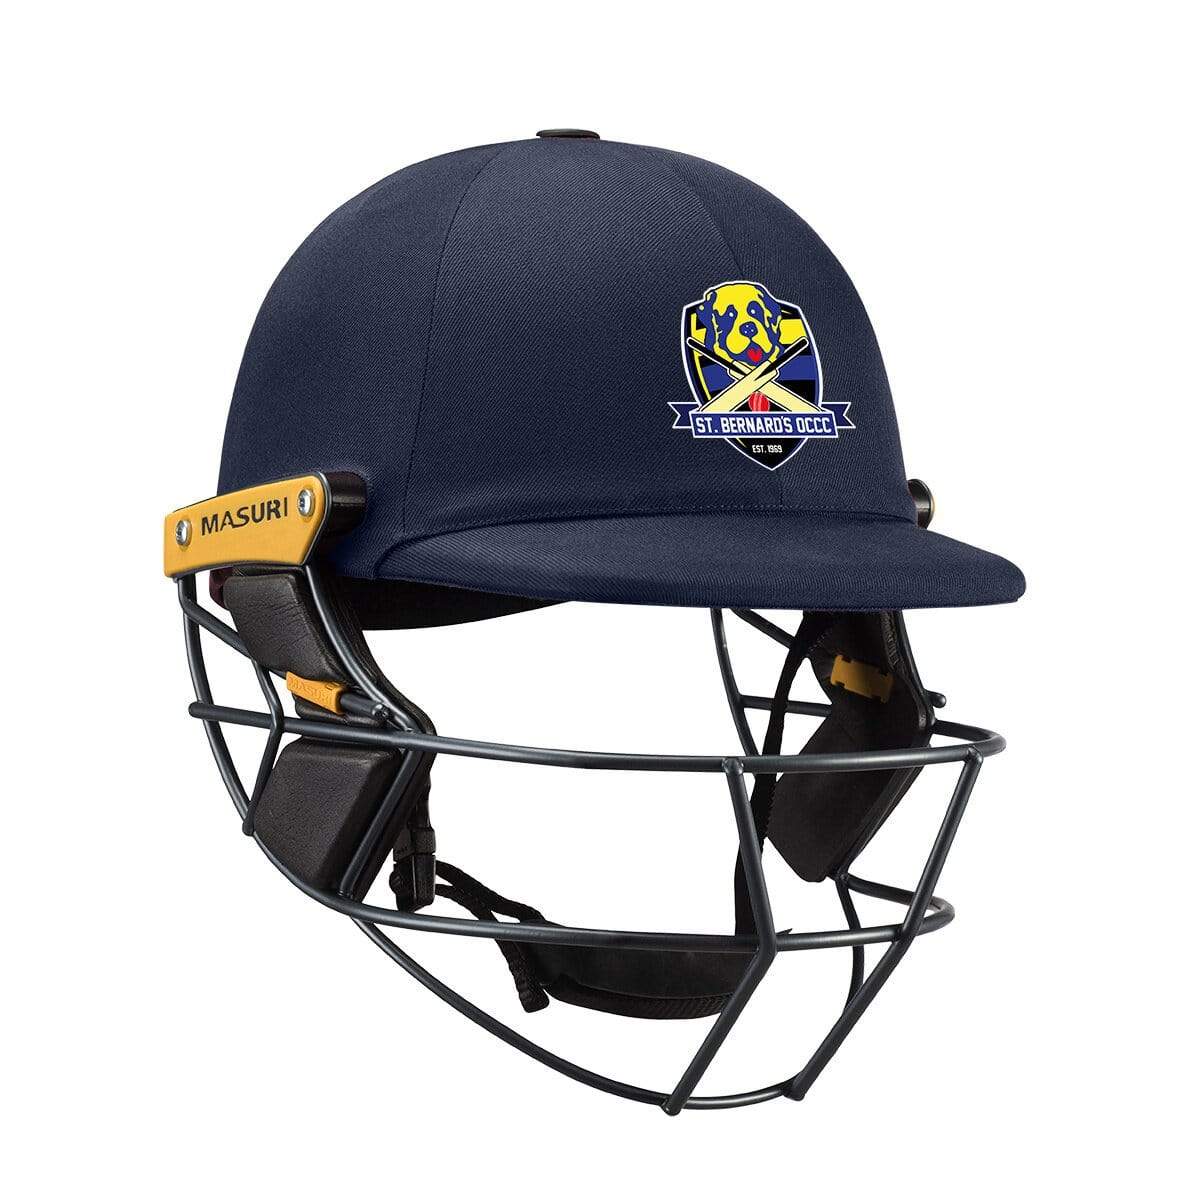 Masuri Club Helmet St Bernards Cricket Club Helmet